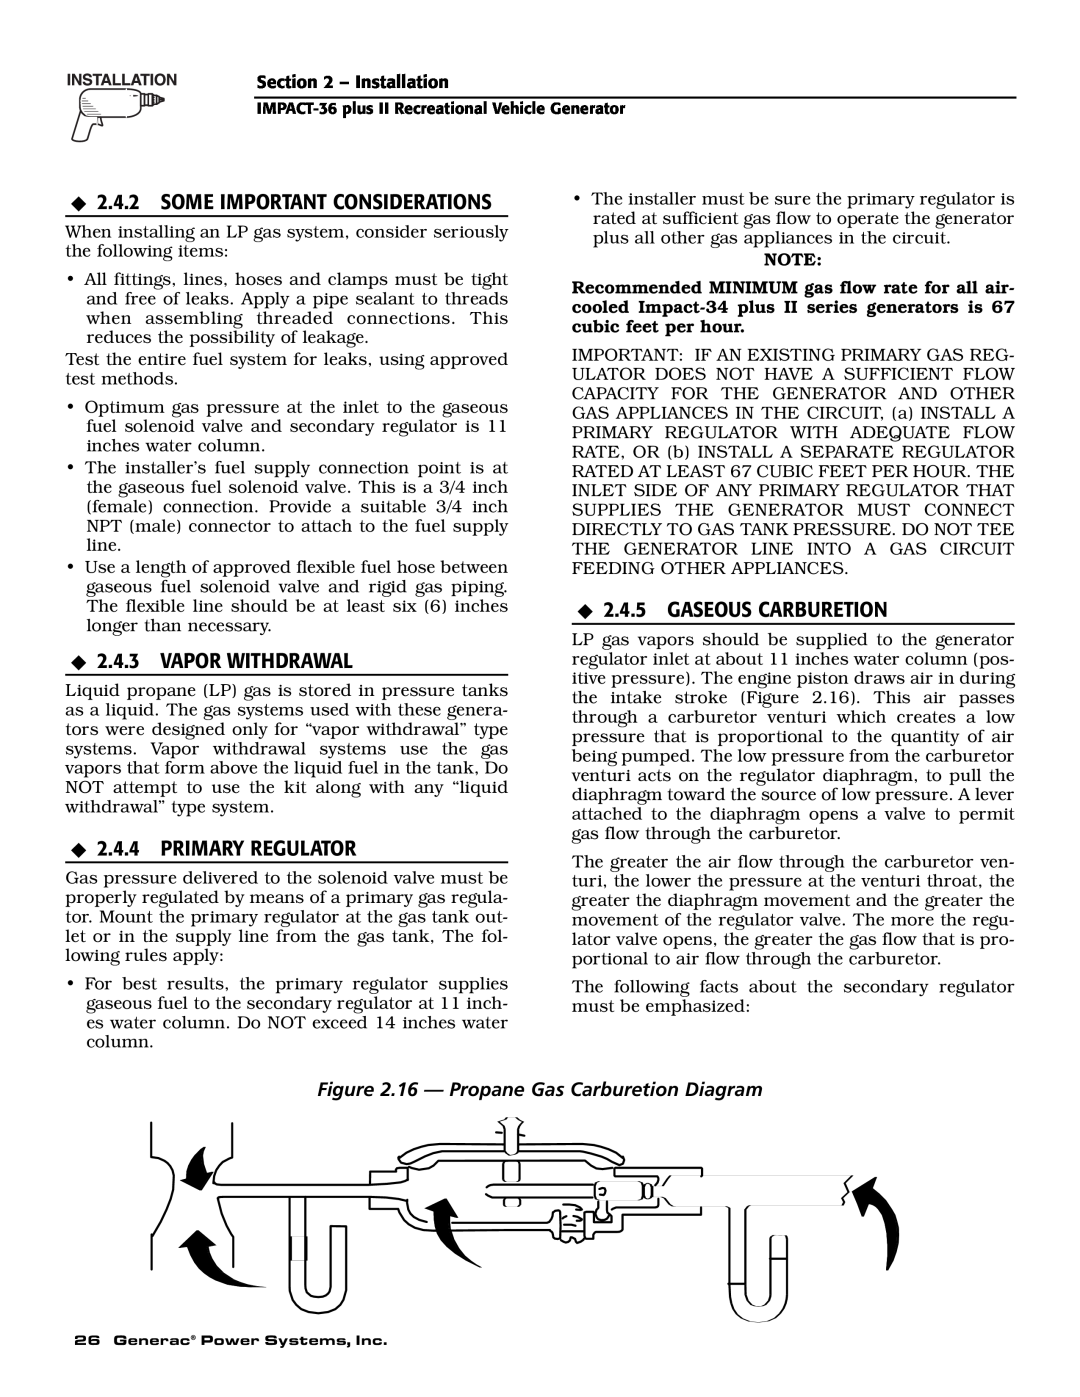 Generac 00941-3 owner manual Some Important Considerations, Vapor Withdrawal, Primary Regulator, Gaseous Carburetion 